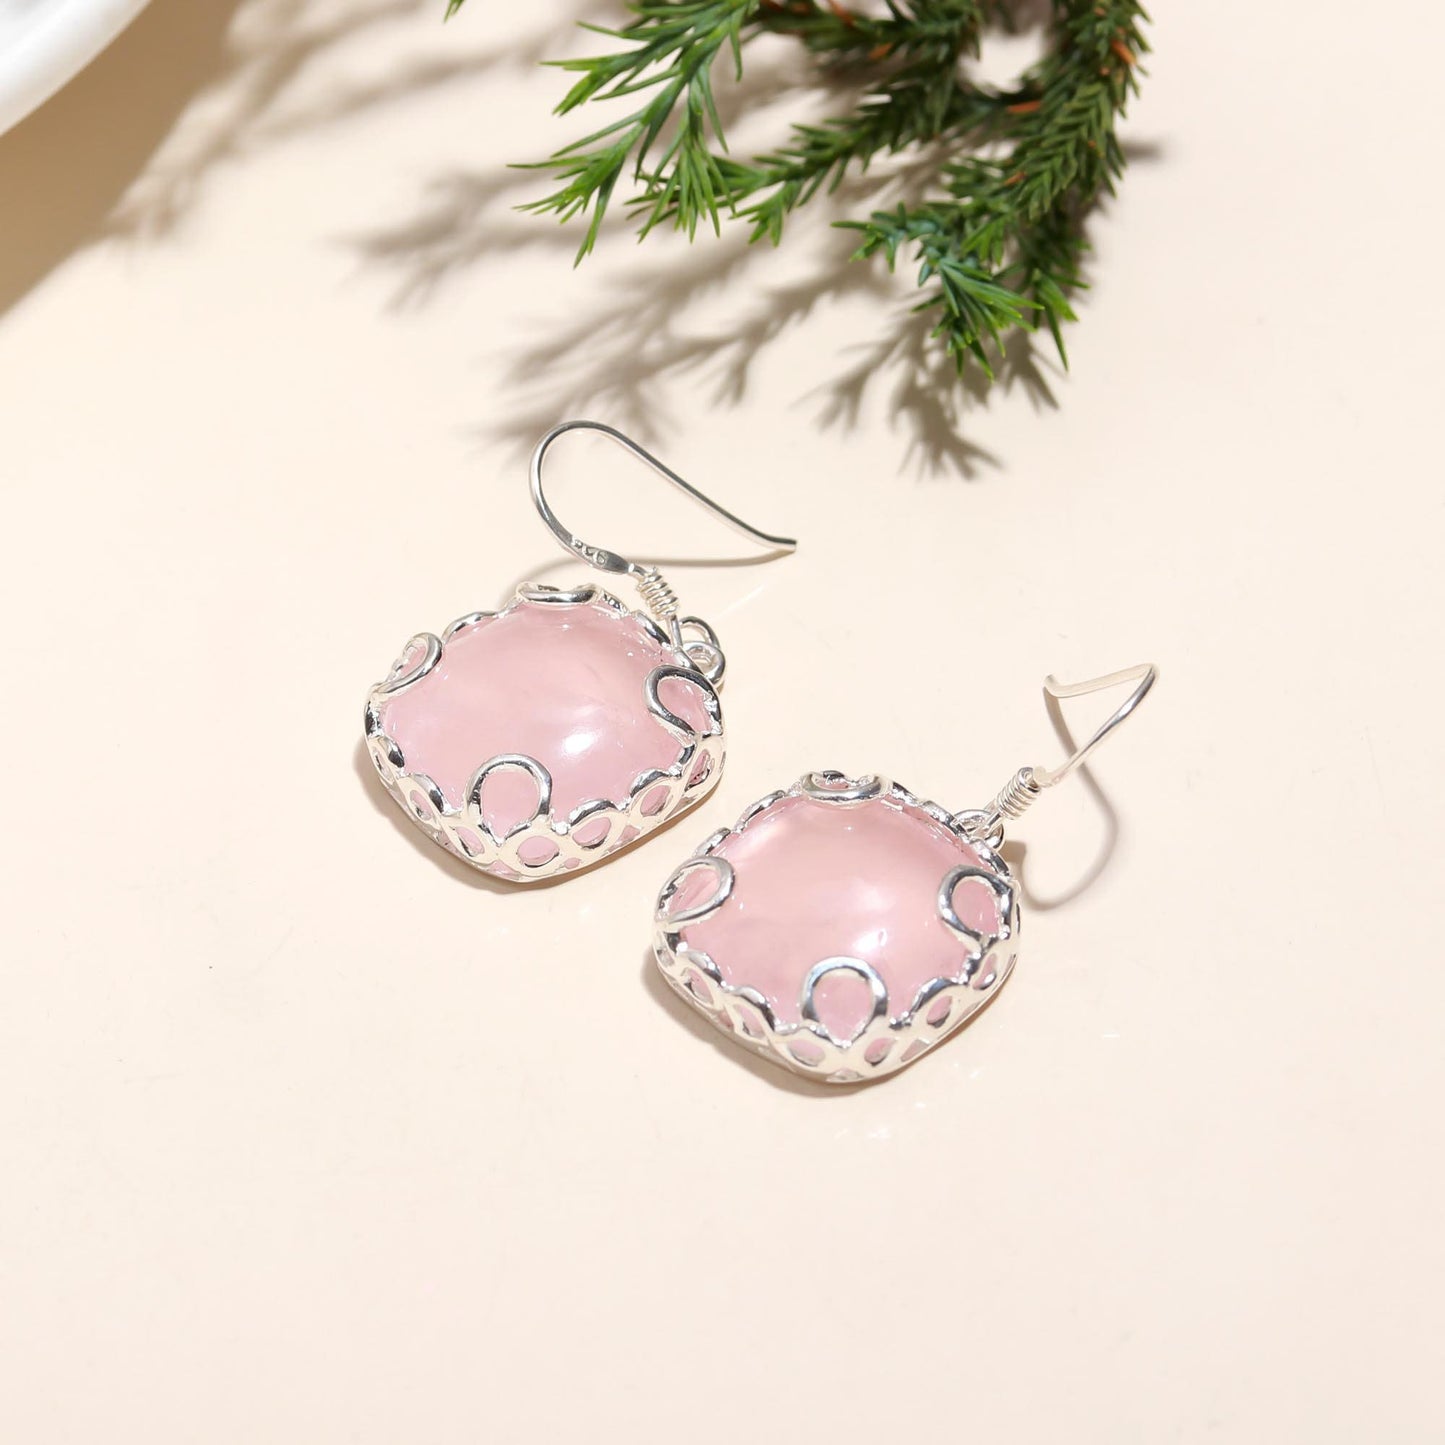 Pink Rose Quartz Earring in Dangle Earwire, Birthday, Anniversary, Women, Teenager Girls, Gift for her. Designer Solid 925 Sterling Silver